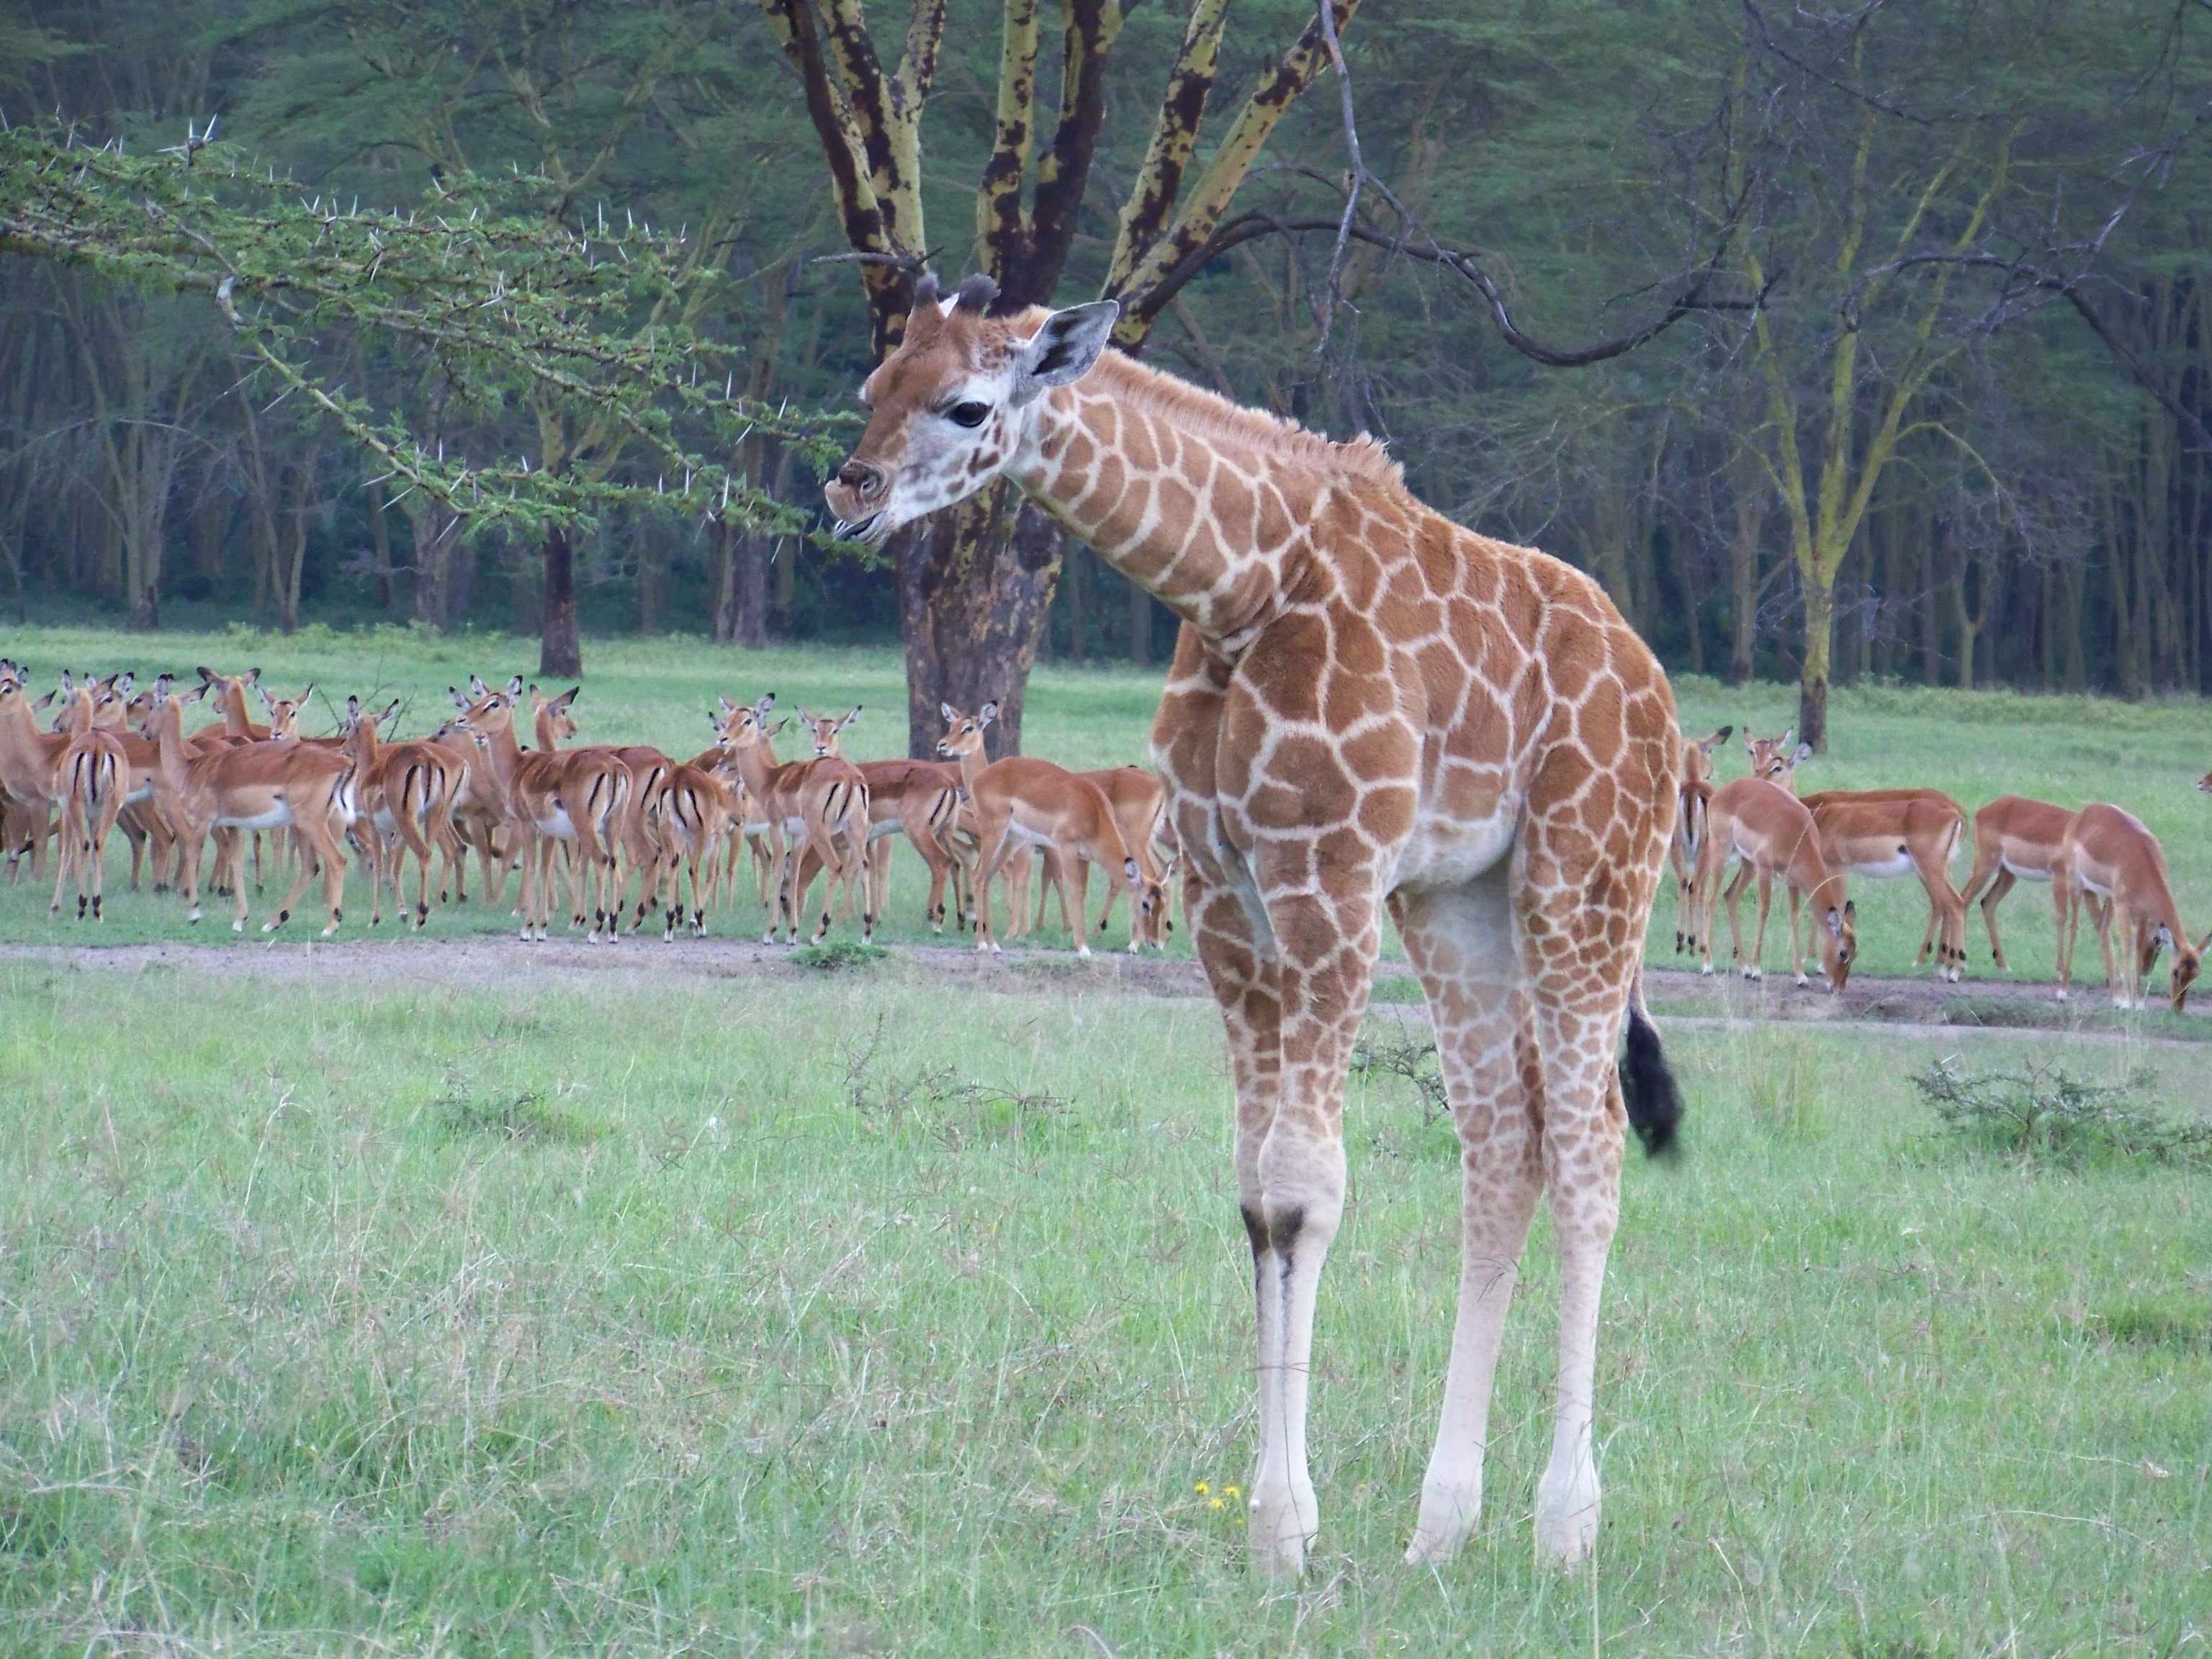 Giraffe and impala-0379